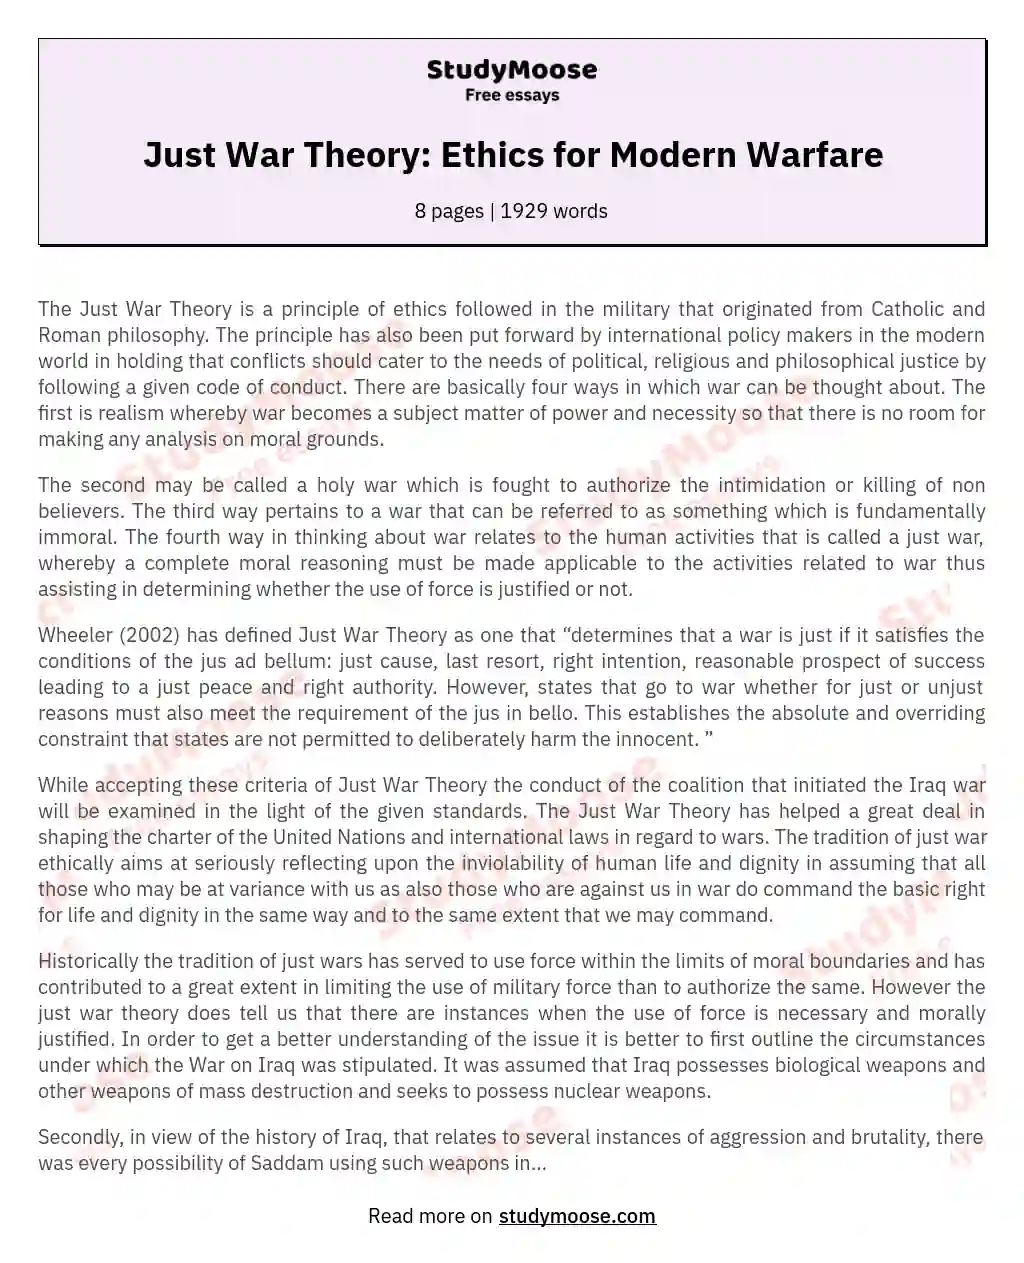 Just War Theory: Ethics for Modern Warfare essay